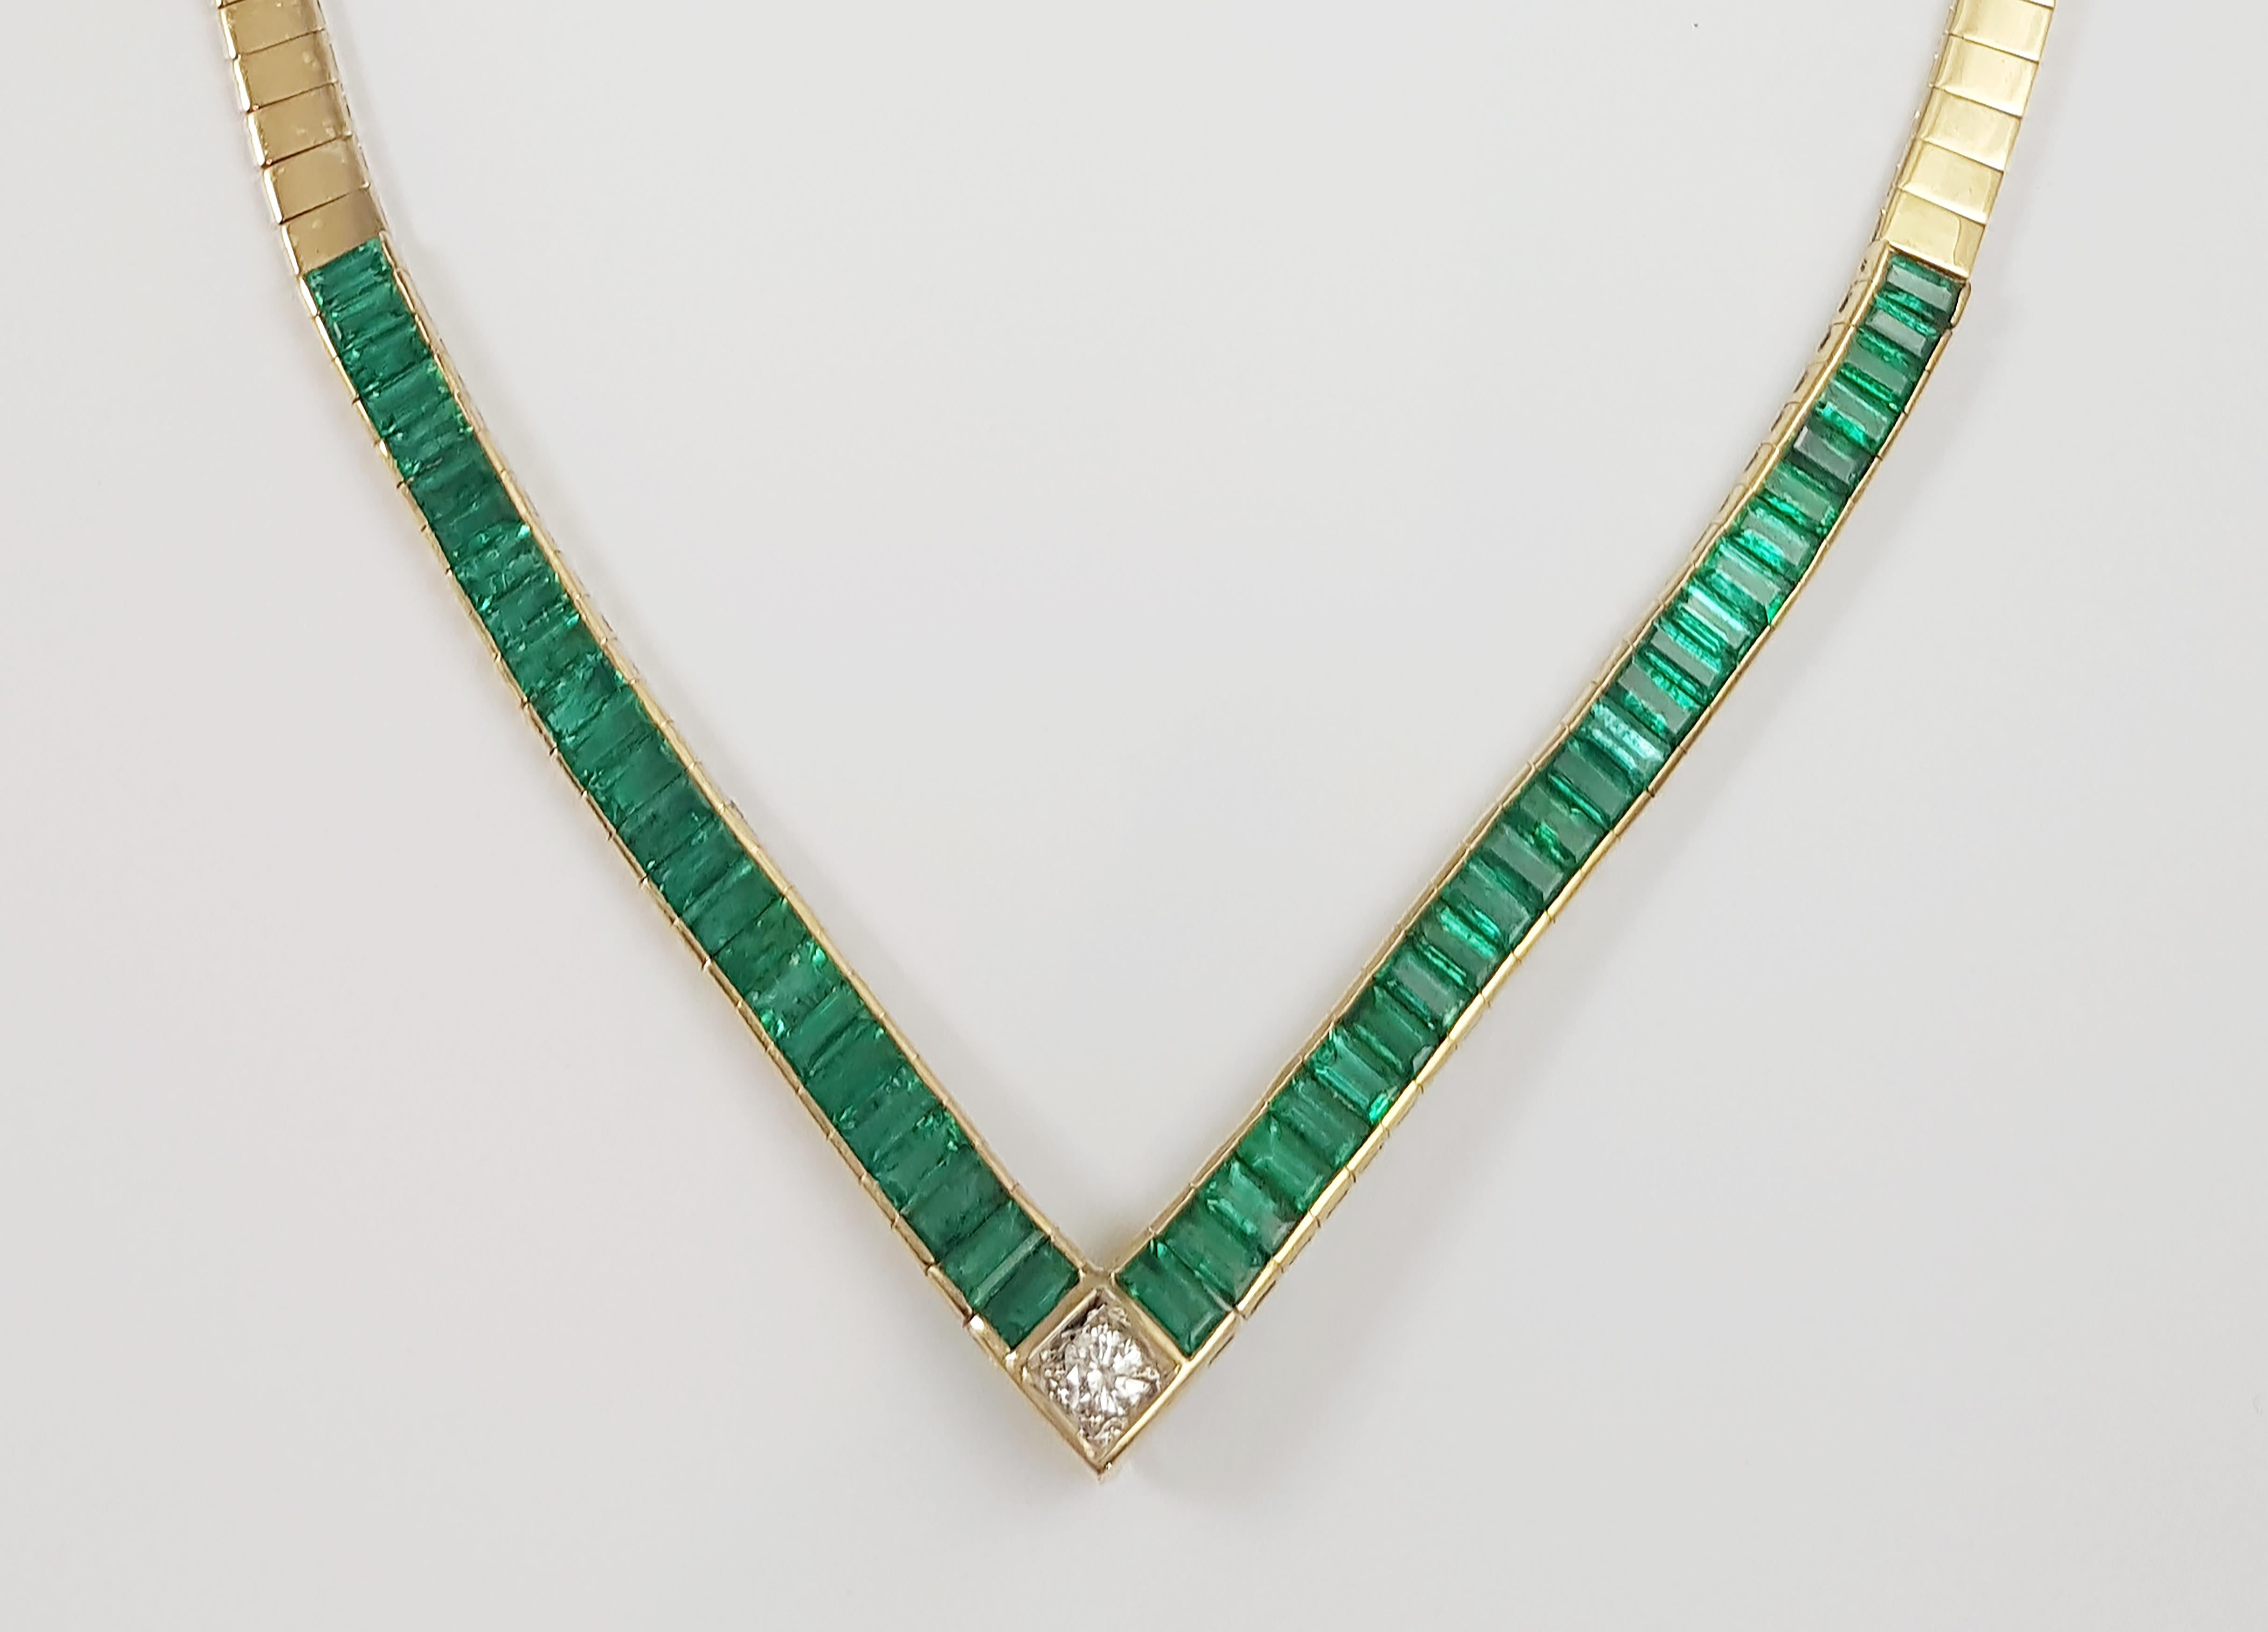 Emerald 12.39 carats with Diamond 0.26 carat Necklace set in 18 Karat Gold Settings

Width:  0.6 cm 
Length: 46.0cm
Total Weight: 38.92 grams

